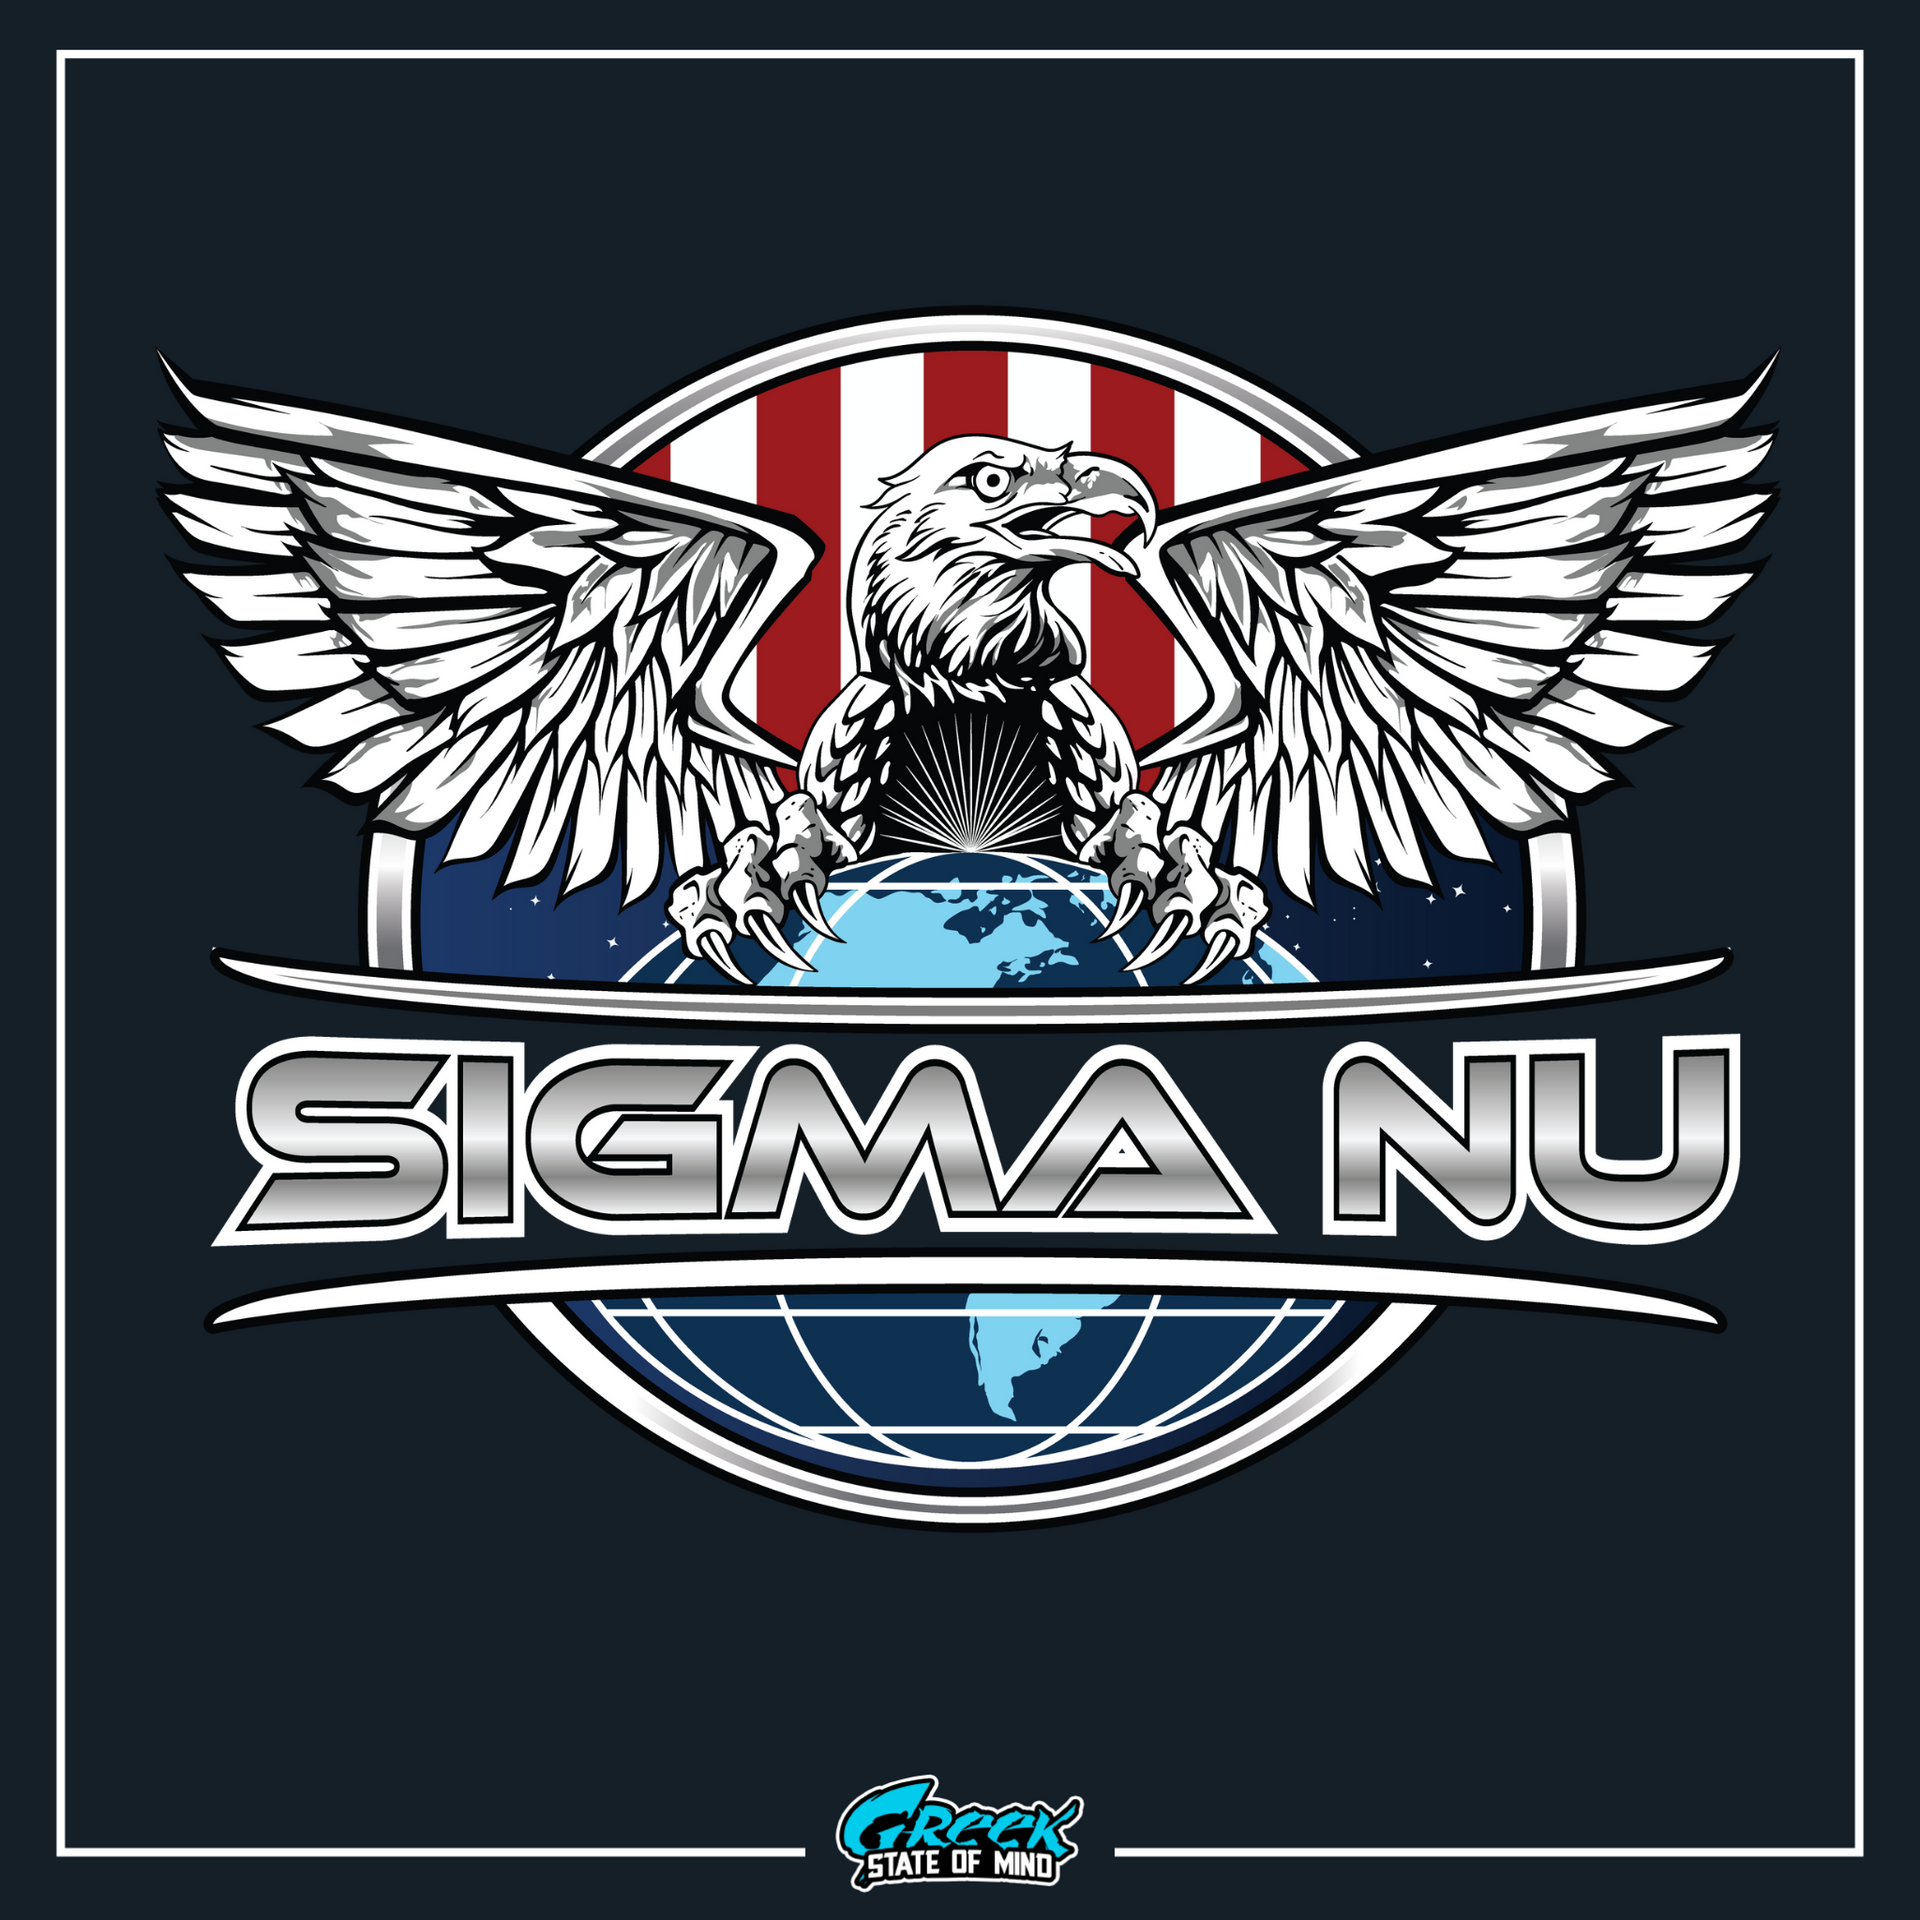 Sigma Nu Graphic Crewneck Sweatshirt | The Fraternal Order | Sigma Nu Clothing, Apparel and Merchandise design